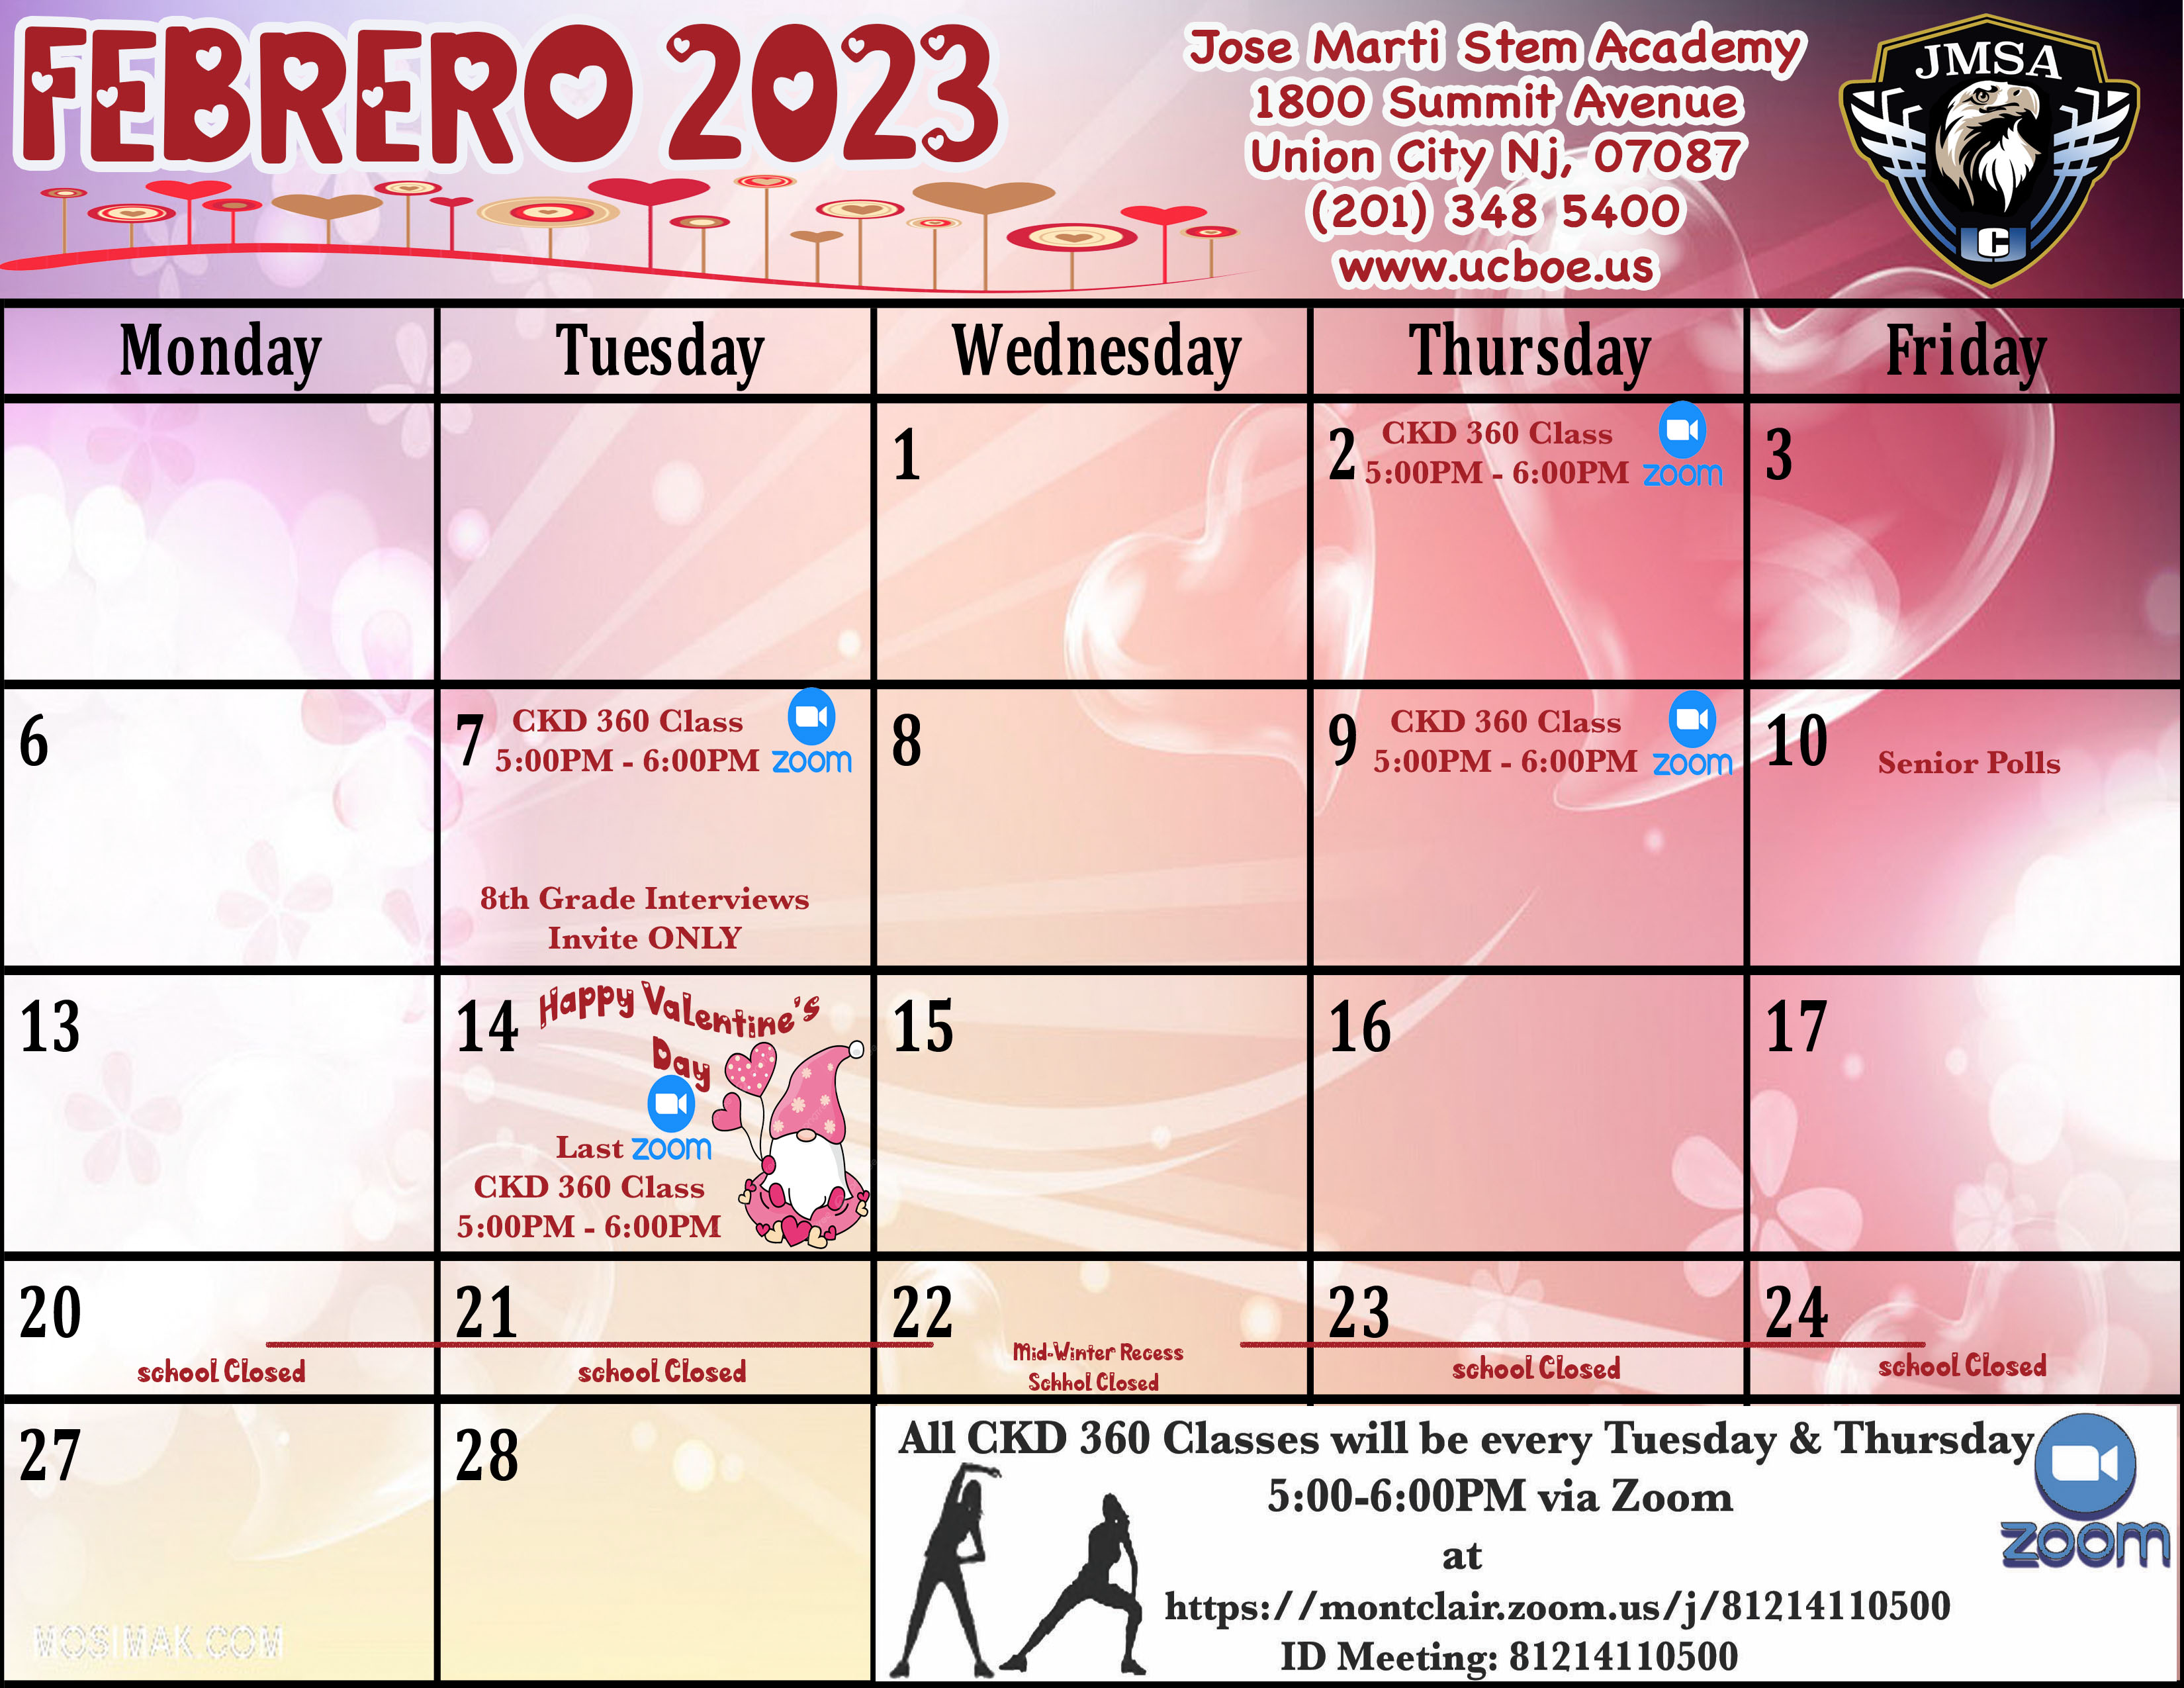 February 2023 Calendar-Jose Martí STEM Academy